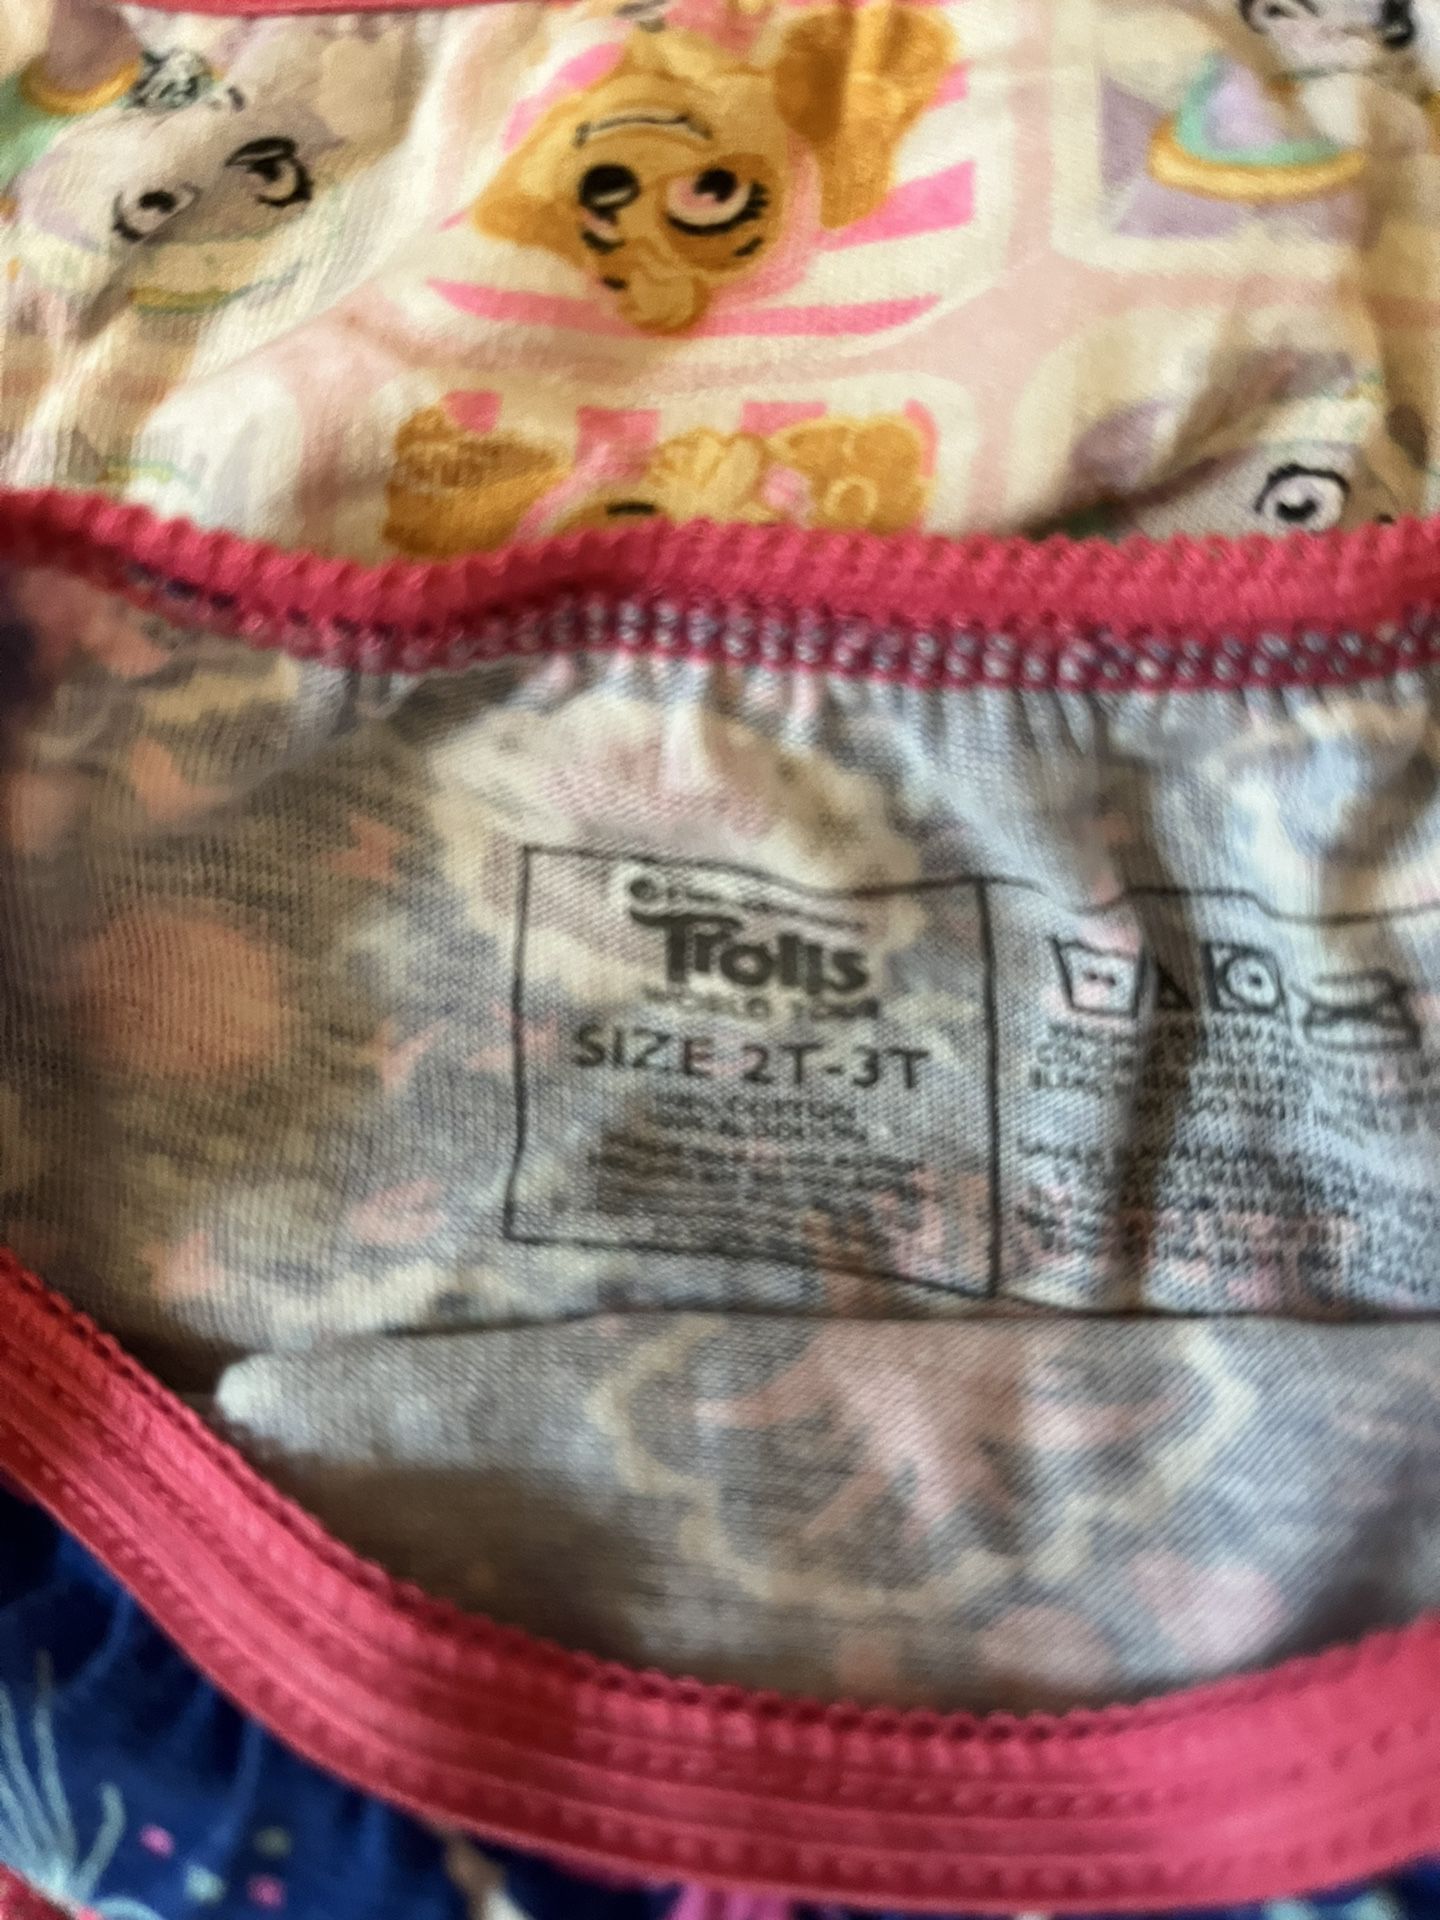 25 Pairs Of Toddler Girls Underwear- Size 2T-3T 